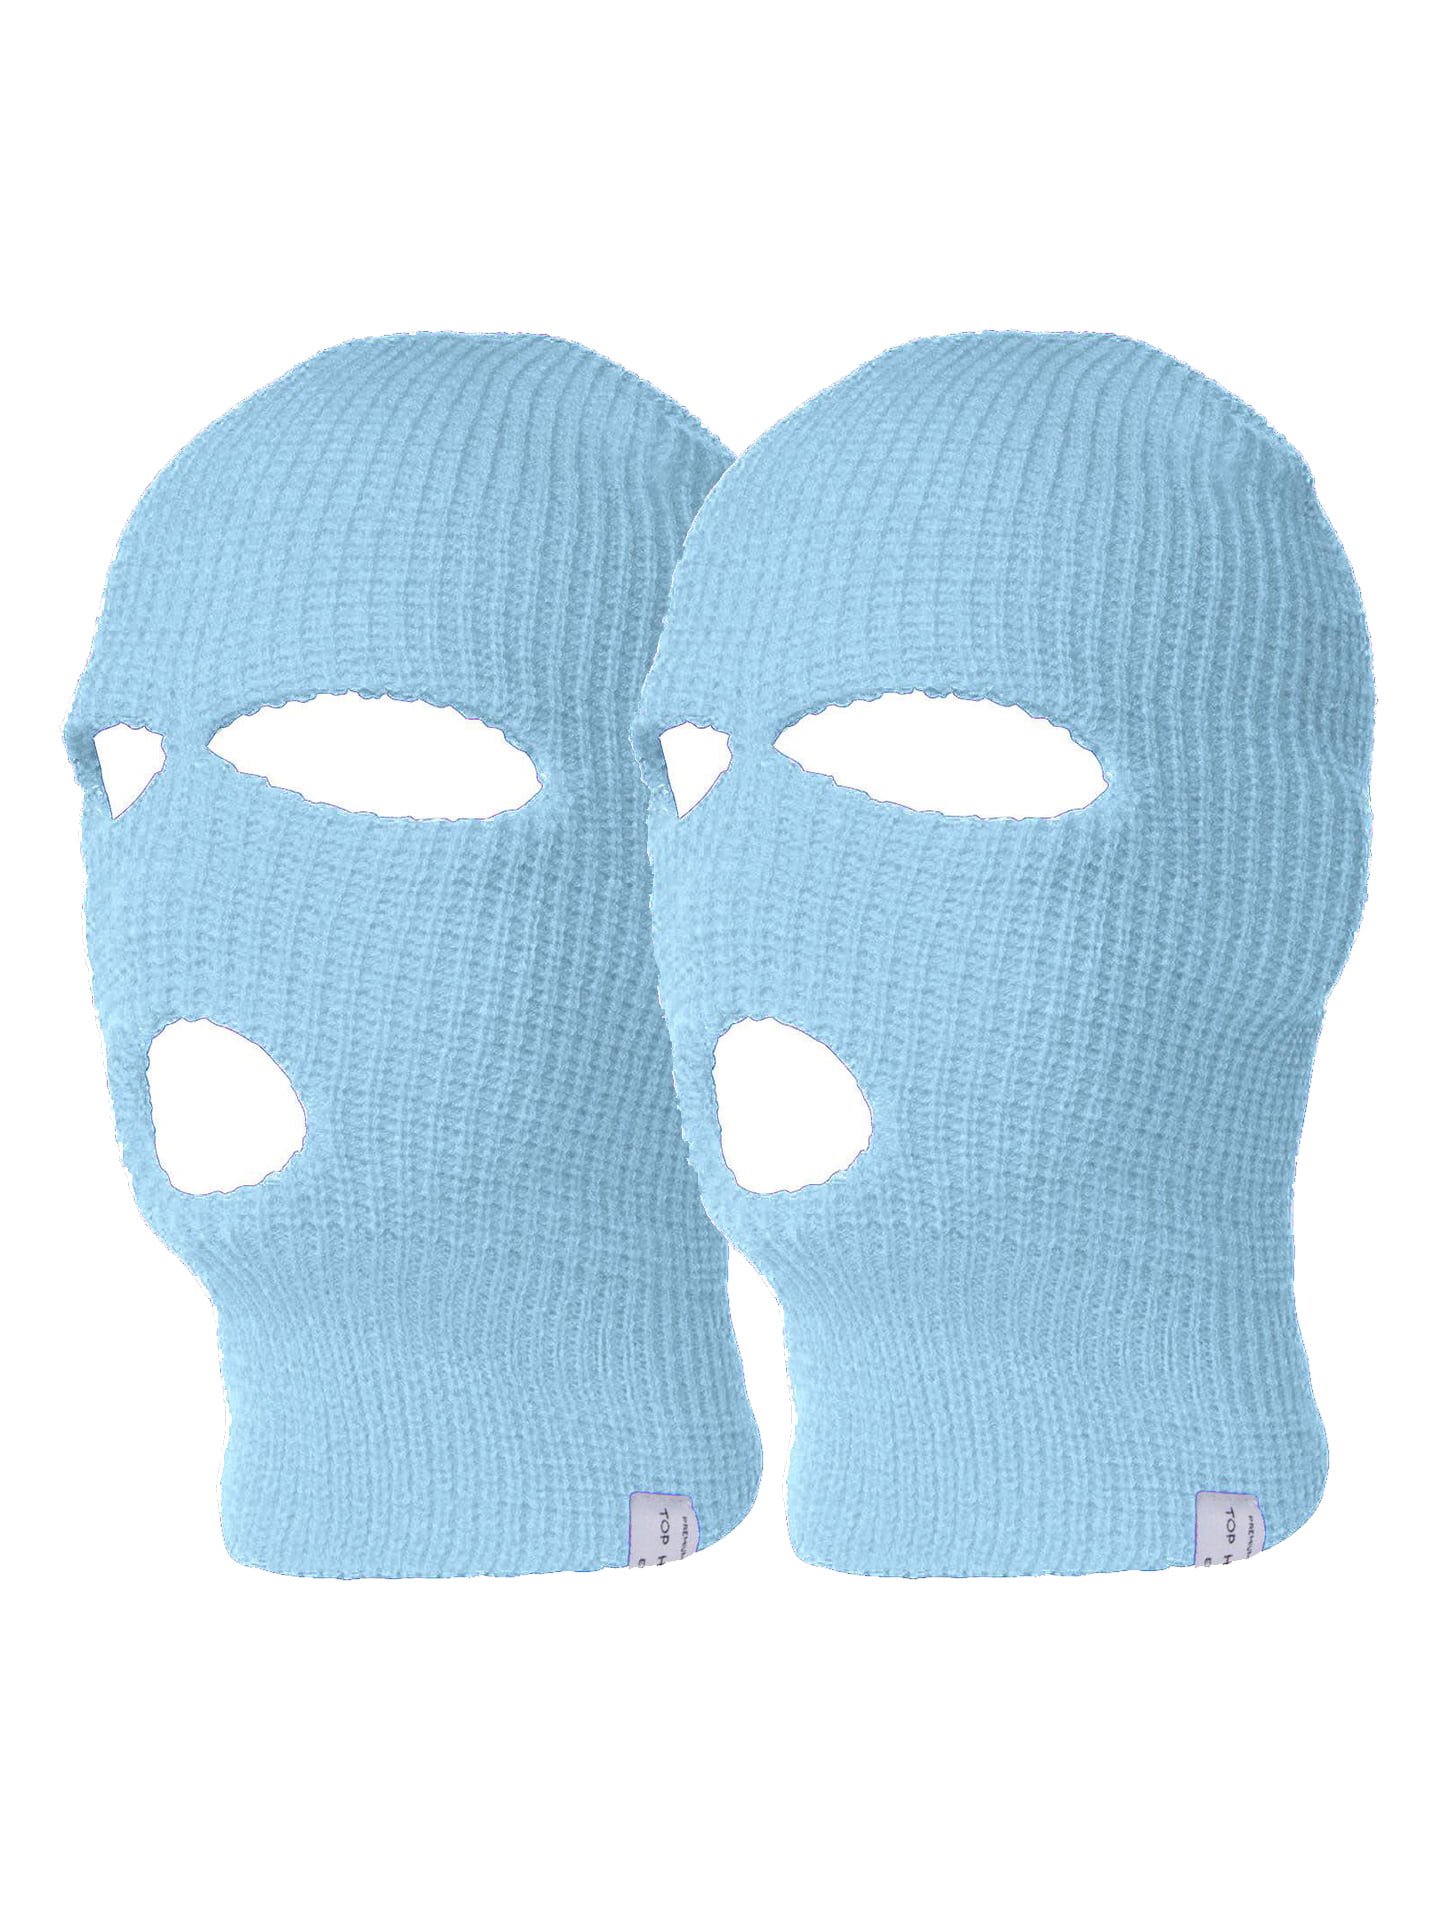 TopHeadwear's 3 Hole Face Ski Mask White 